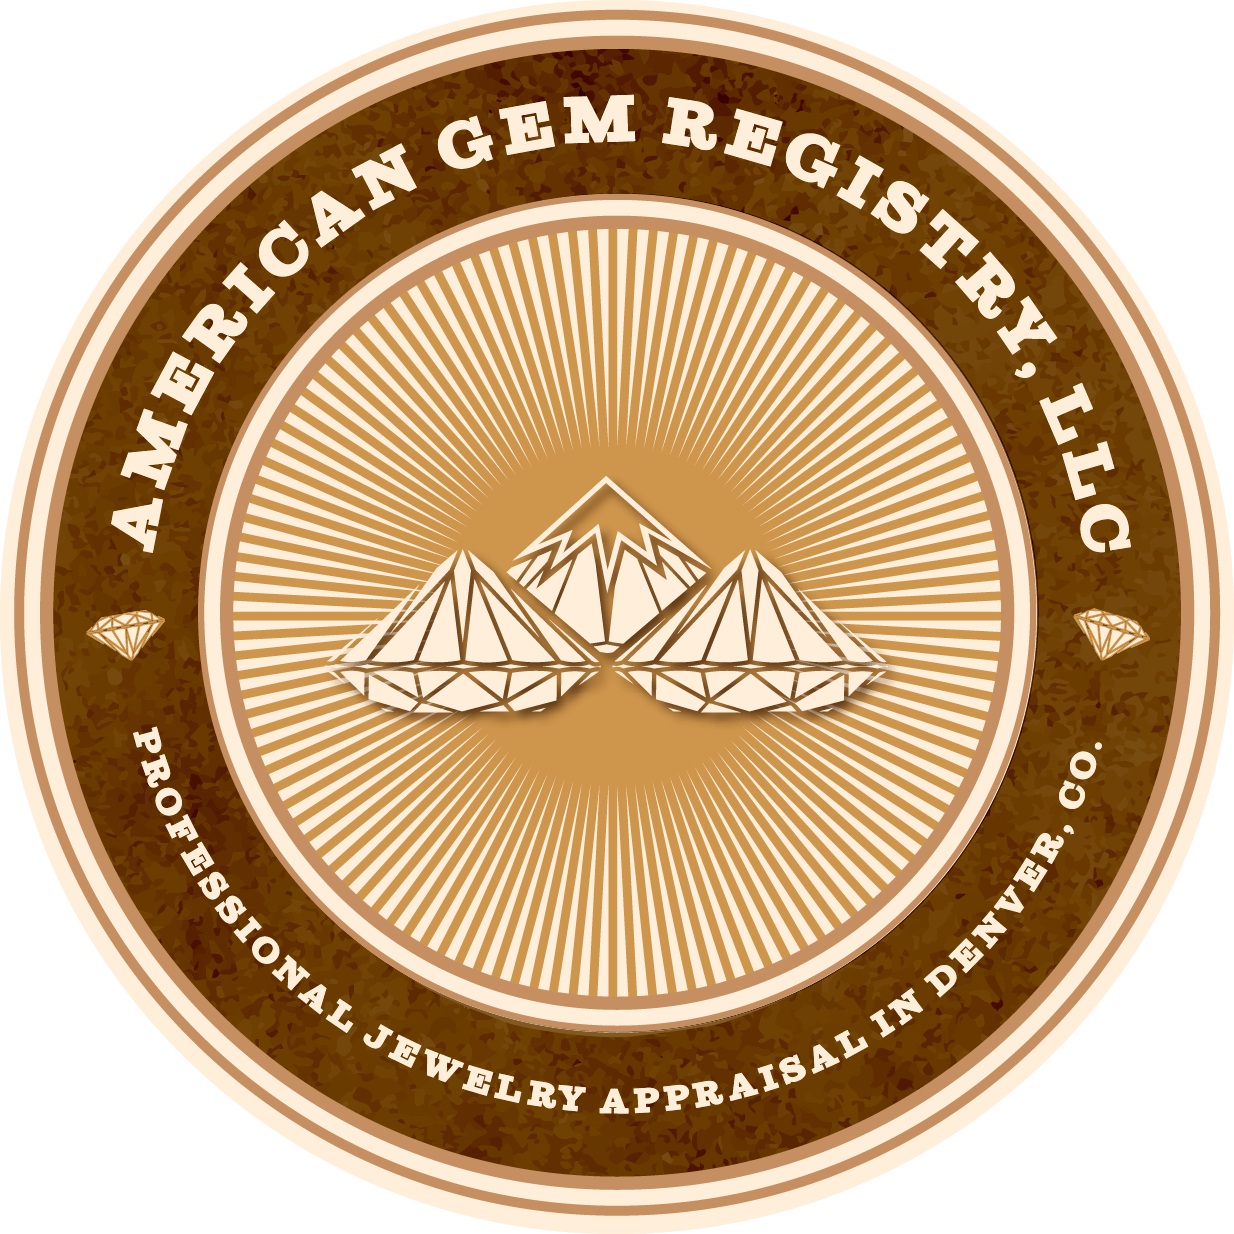 The American Gem Registry Circle Logo